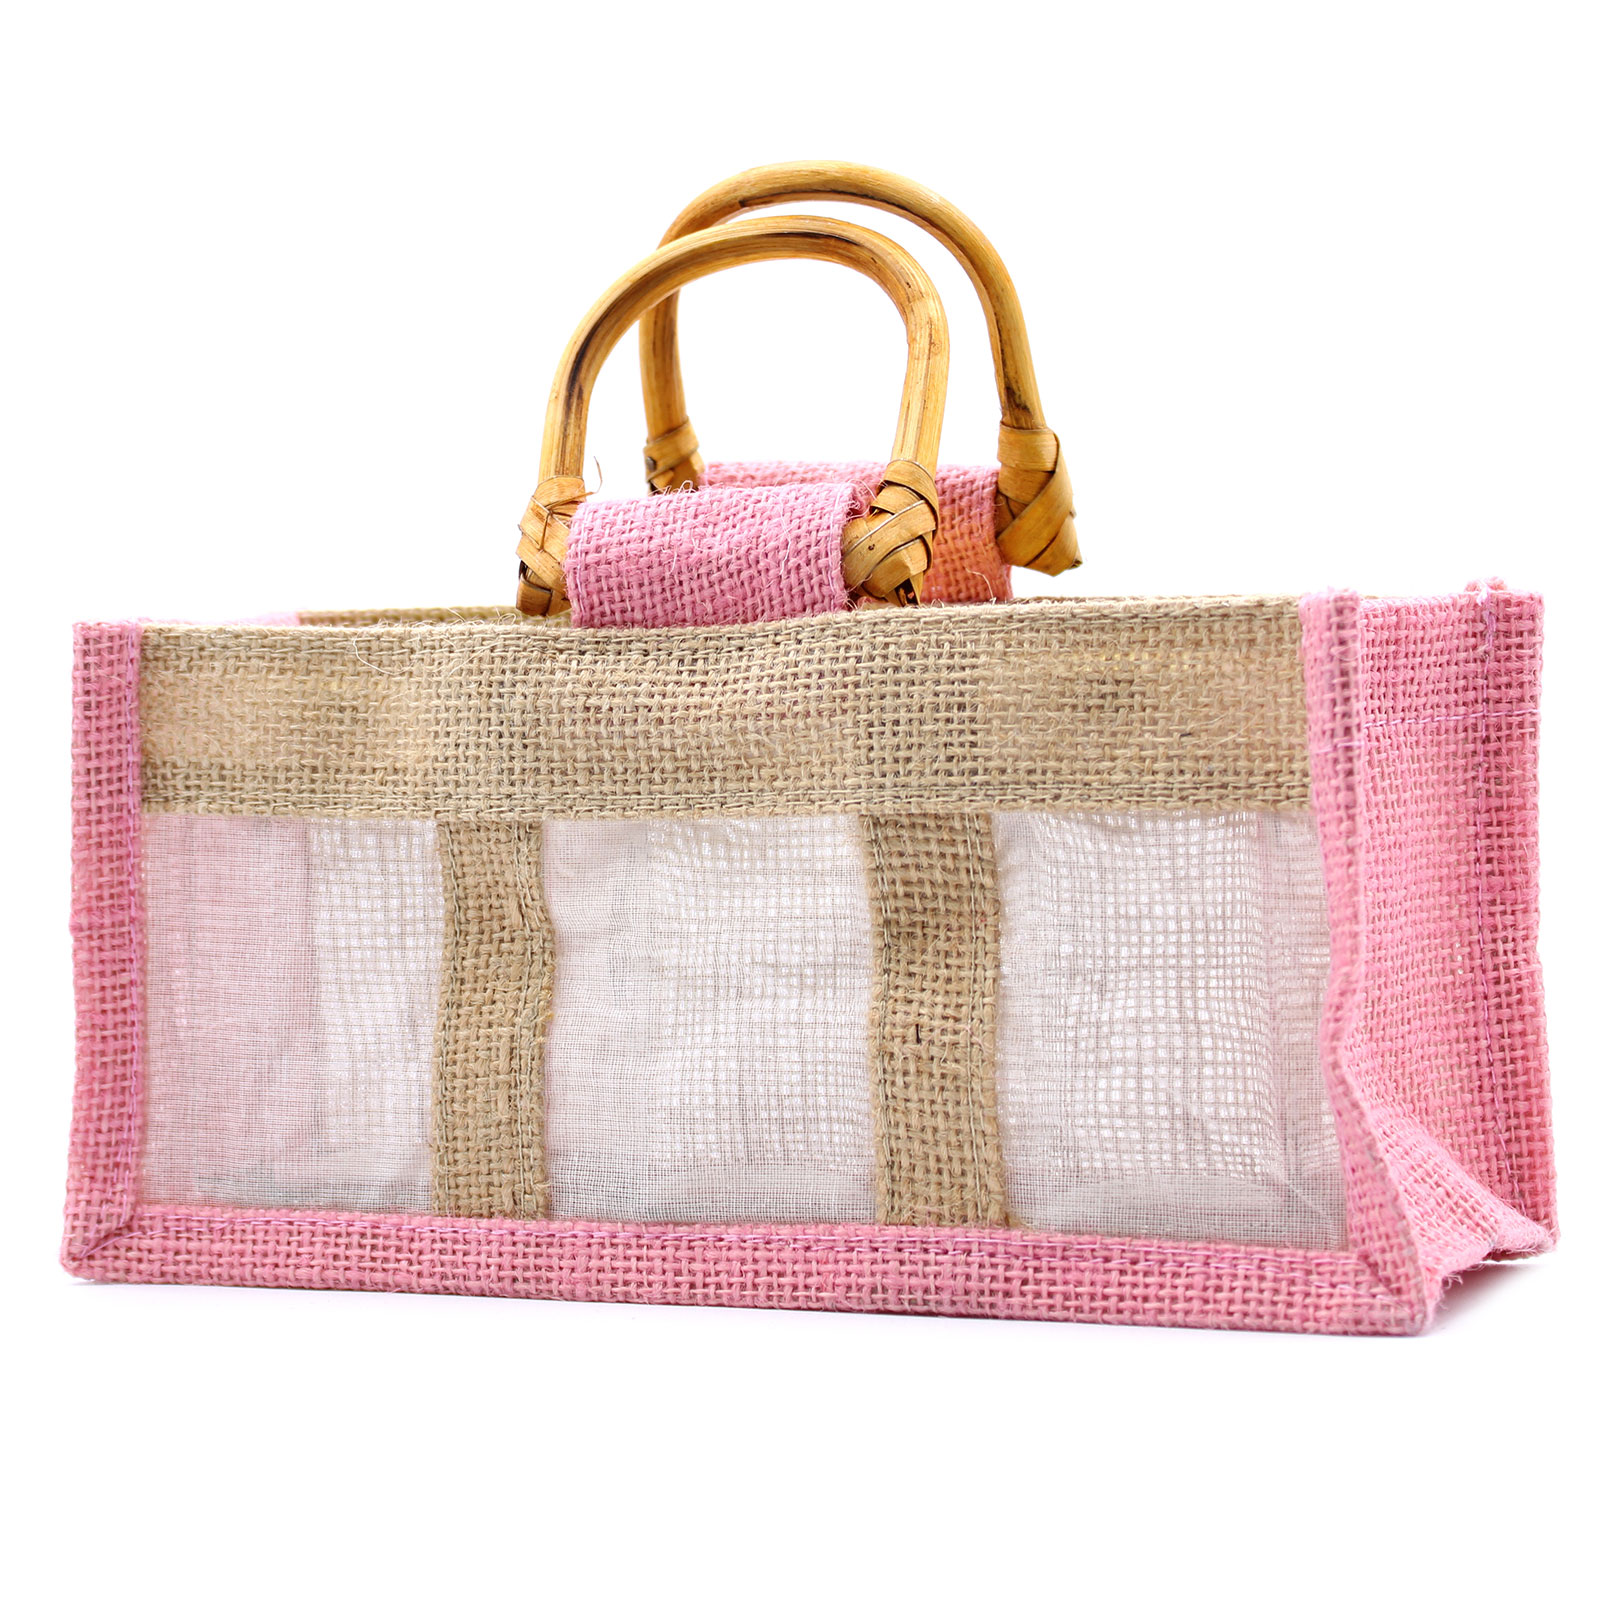 Dárková taška z juty a bavlny - Růžová - 3 okénka